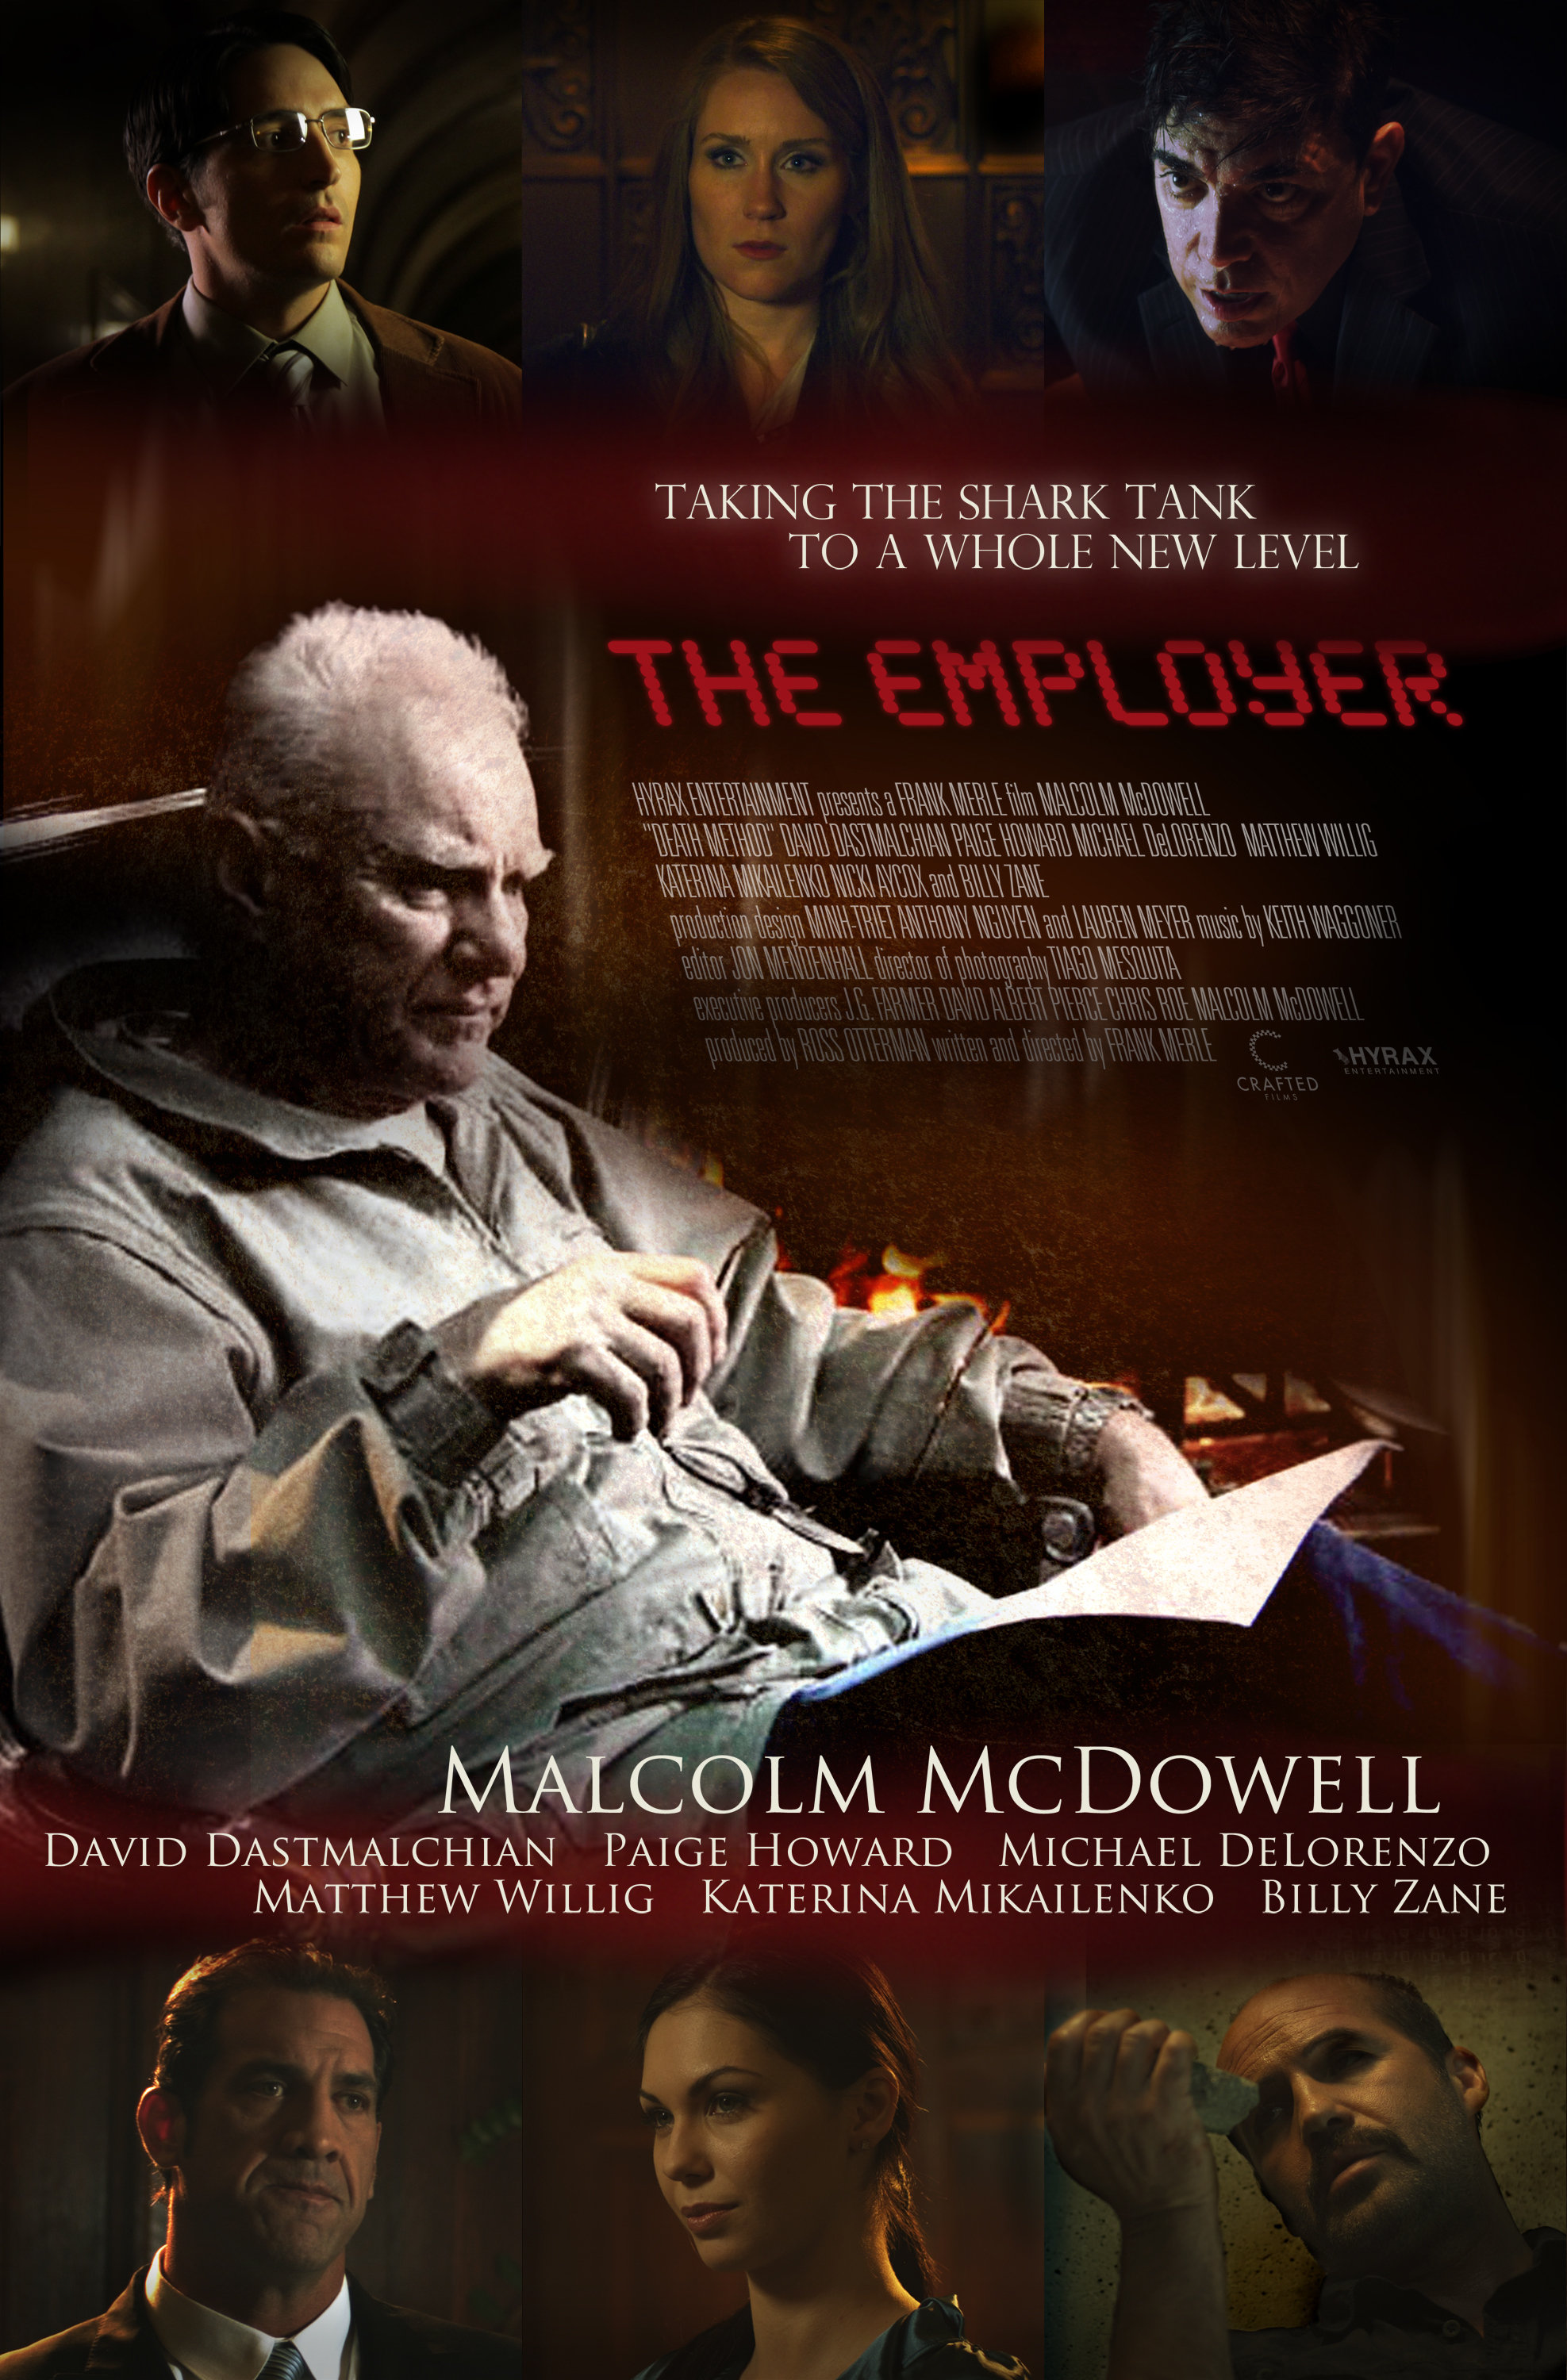 Malcolm McDowell, Billy Zane, Michael DeLorenzo, Katerina Kopel, Matthew Willig, Paige Howard and David Dastmalchian in The Employer (2013)